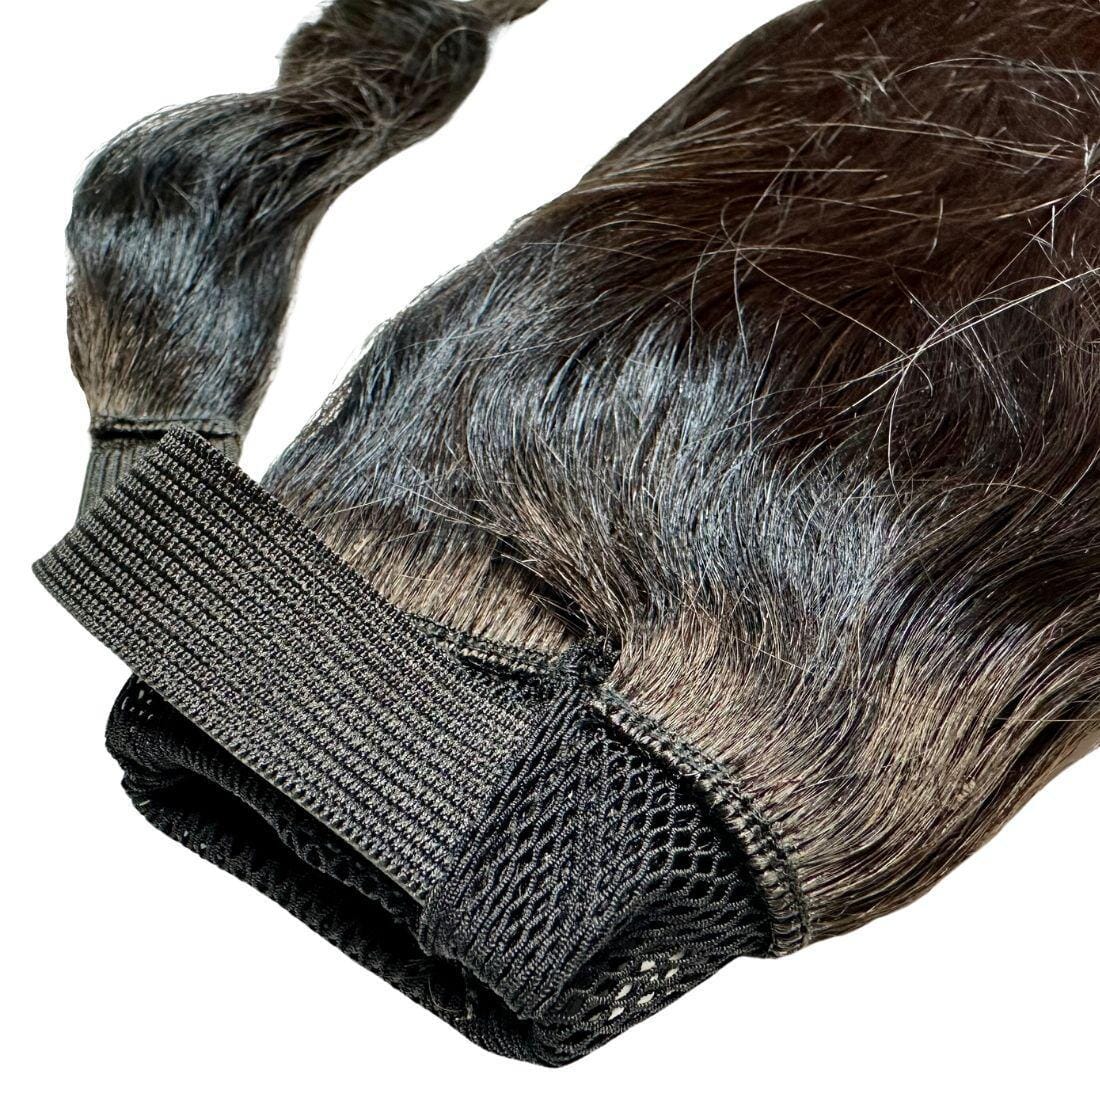 Natural Black Ponytail HBL Hair Extensions 